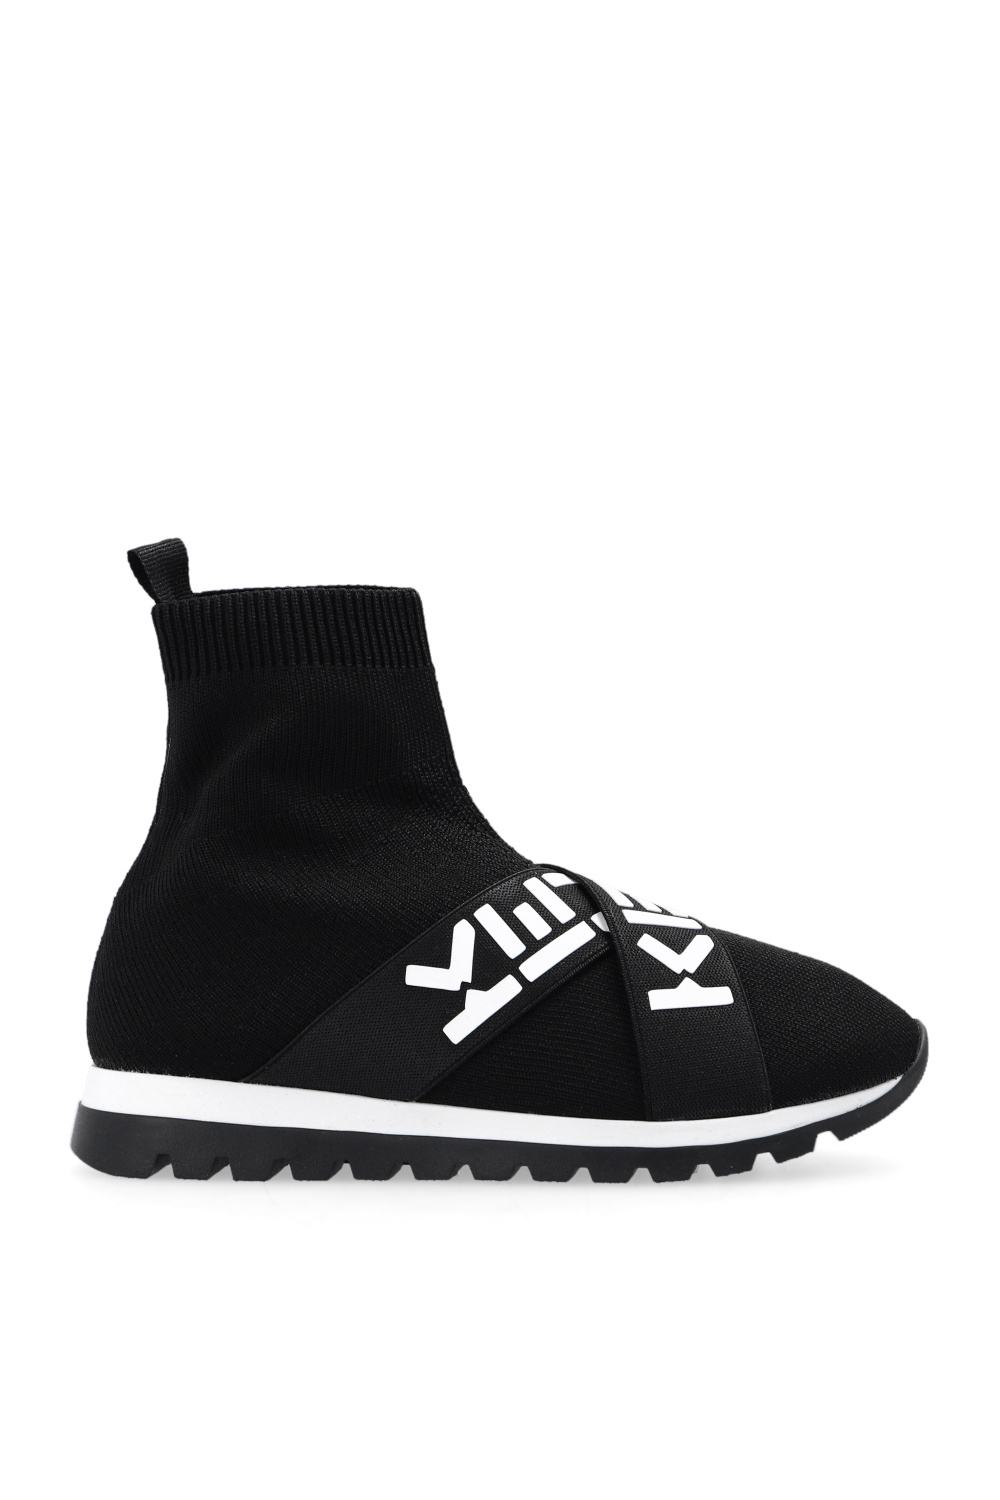 StclaircomoShops Bhutan sneakers sneakers Sock Kids low-top Kenzo 180 - - Gel-Quantum